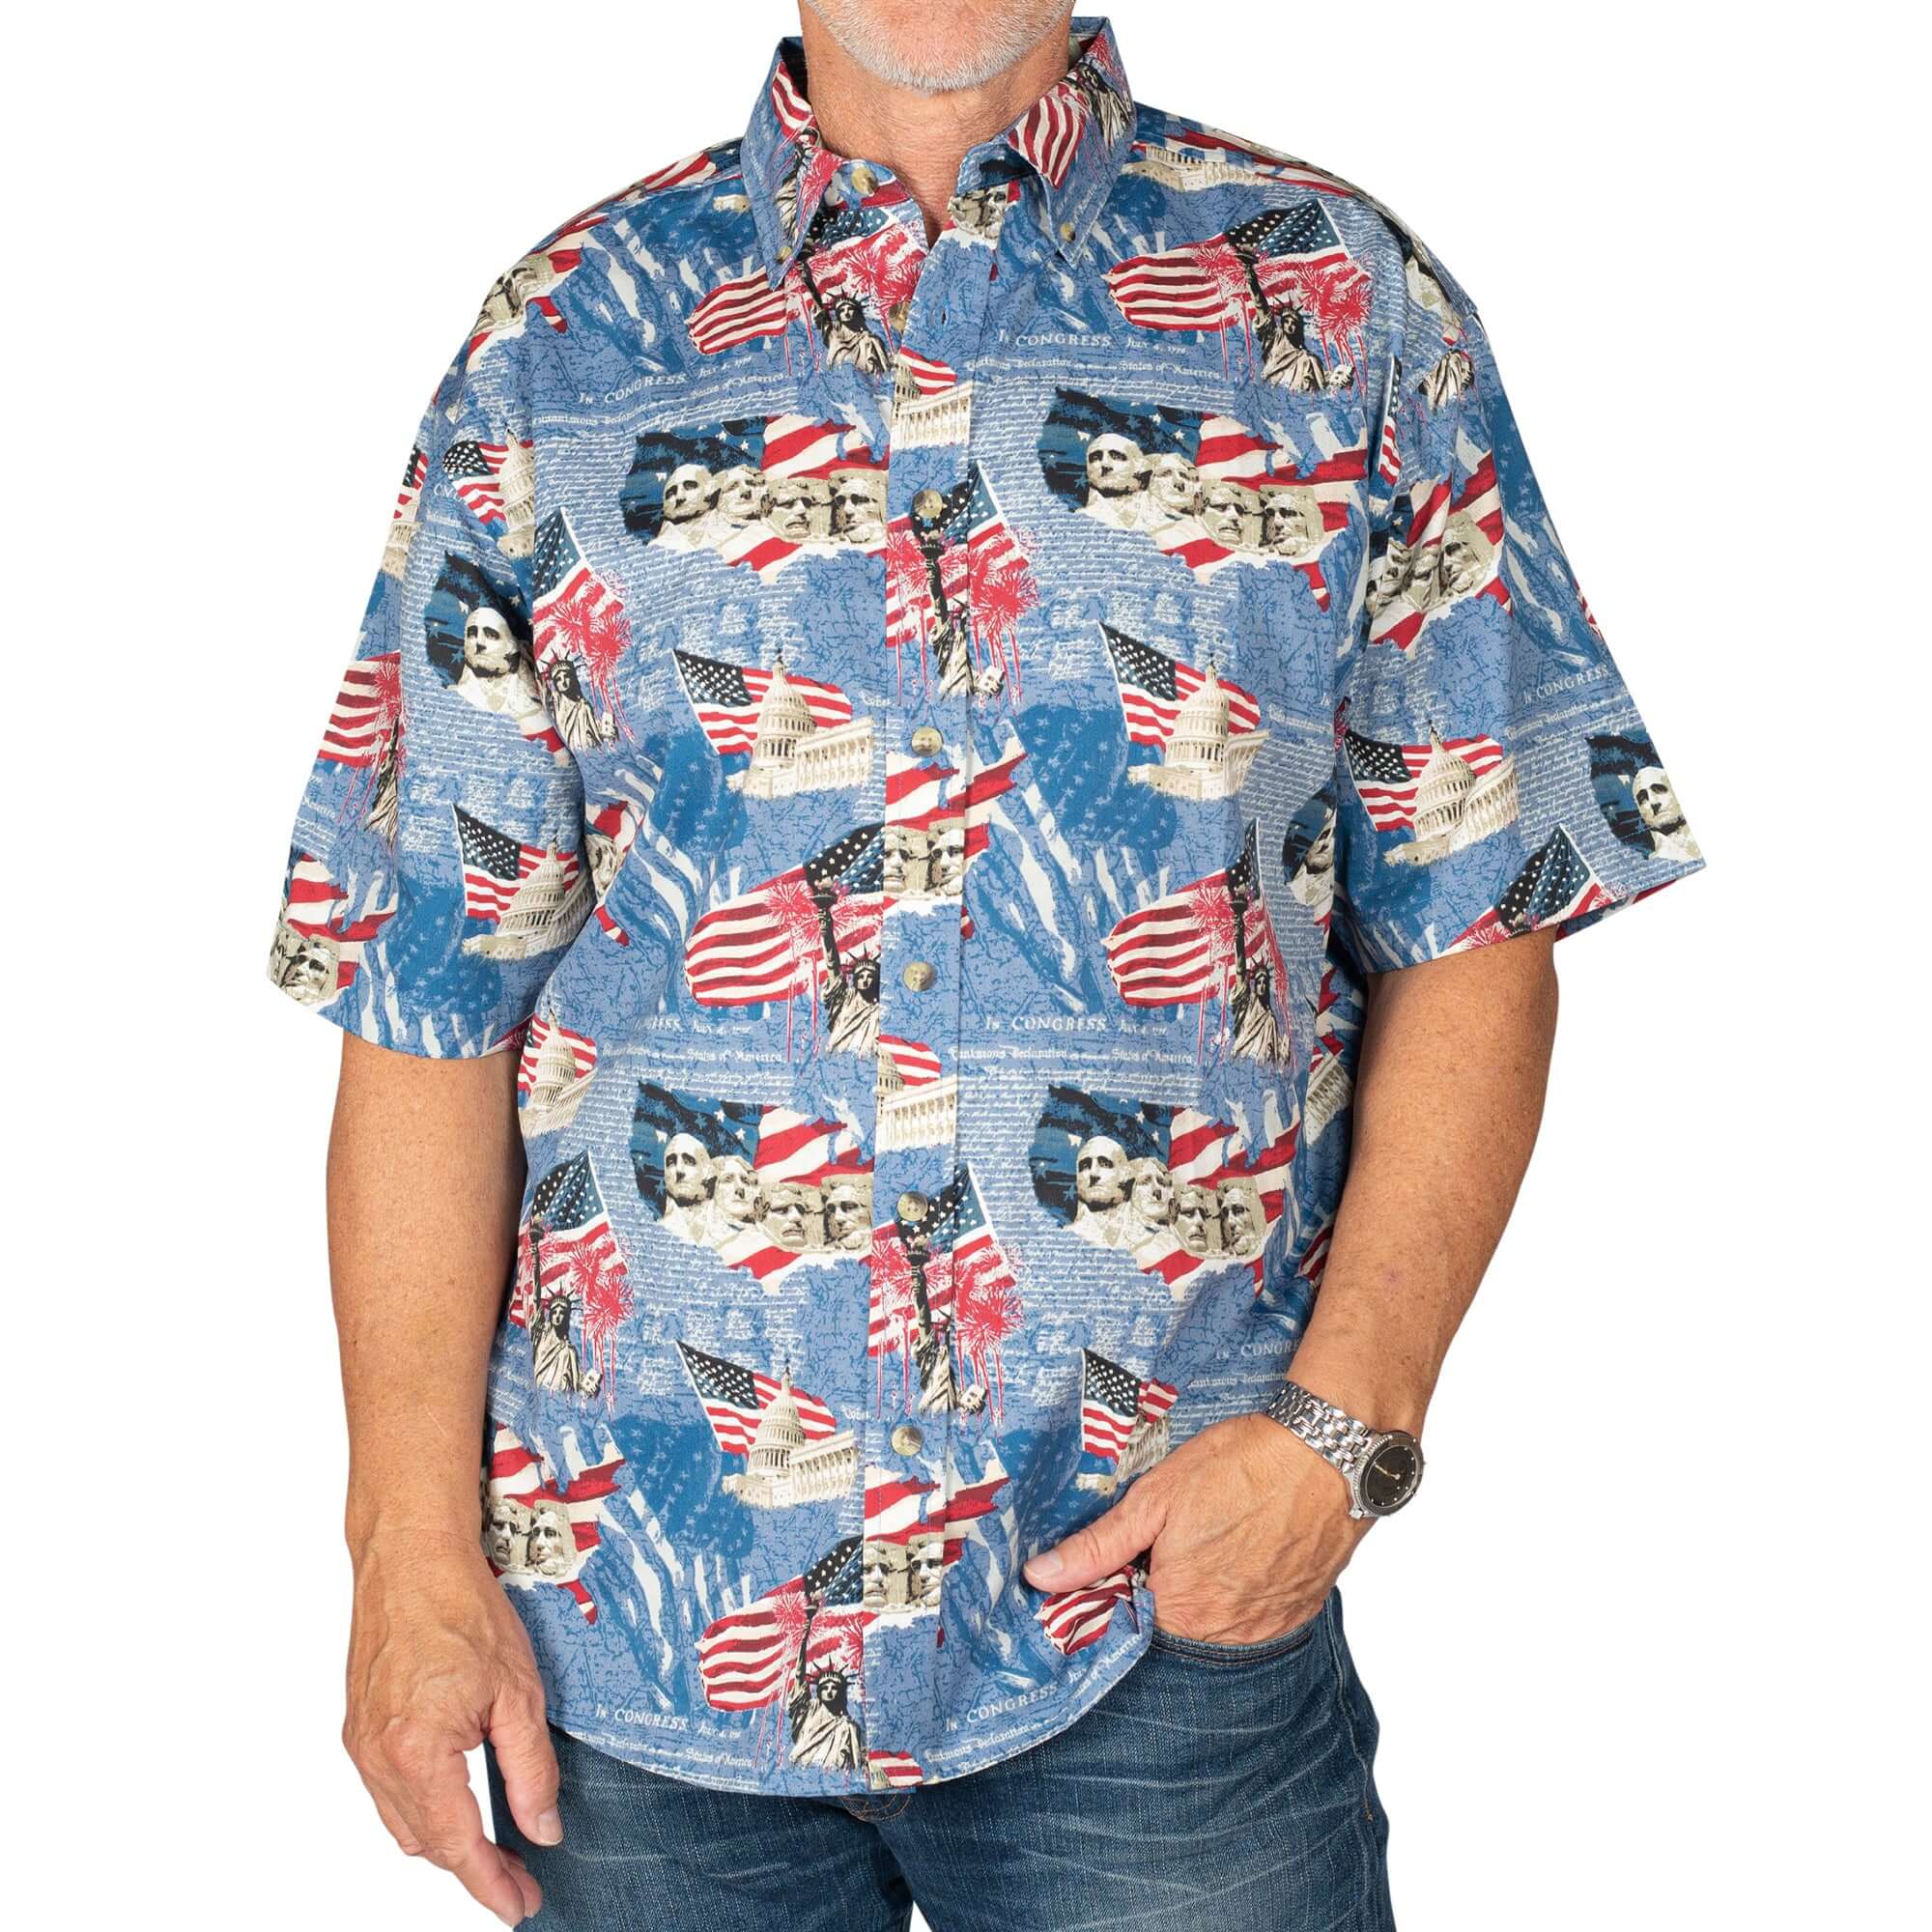 Men's Independence 100% Cotton Button Down Short Sleeve Shirt - the flag shirt